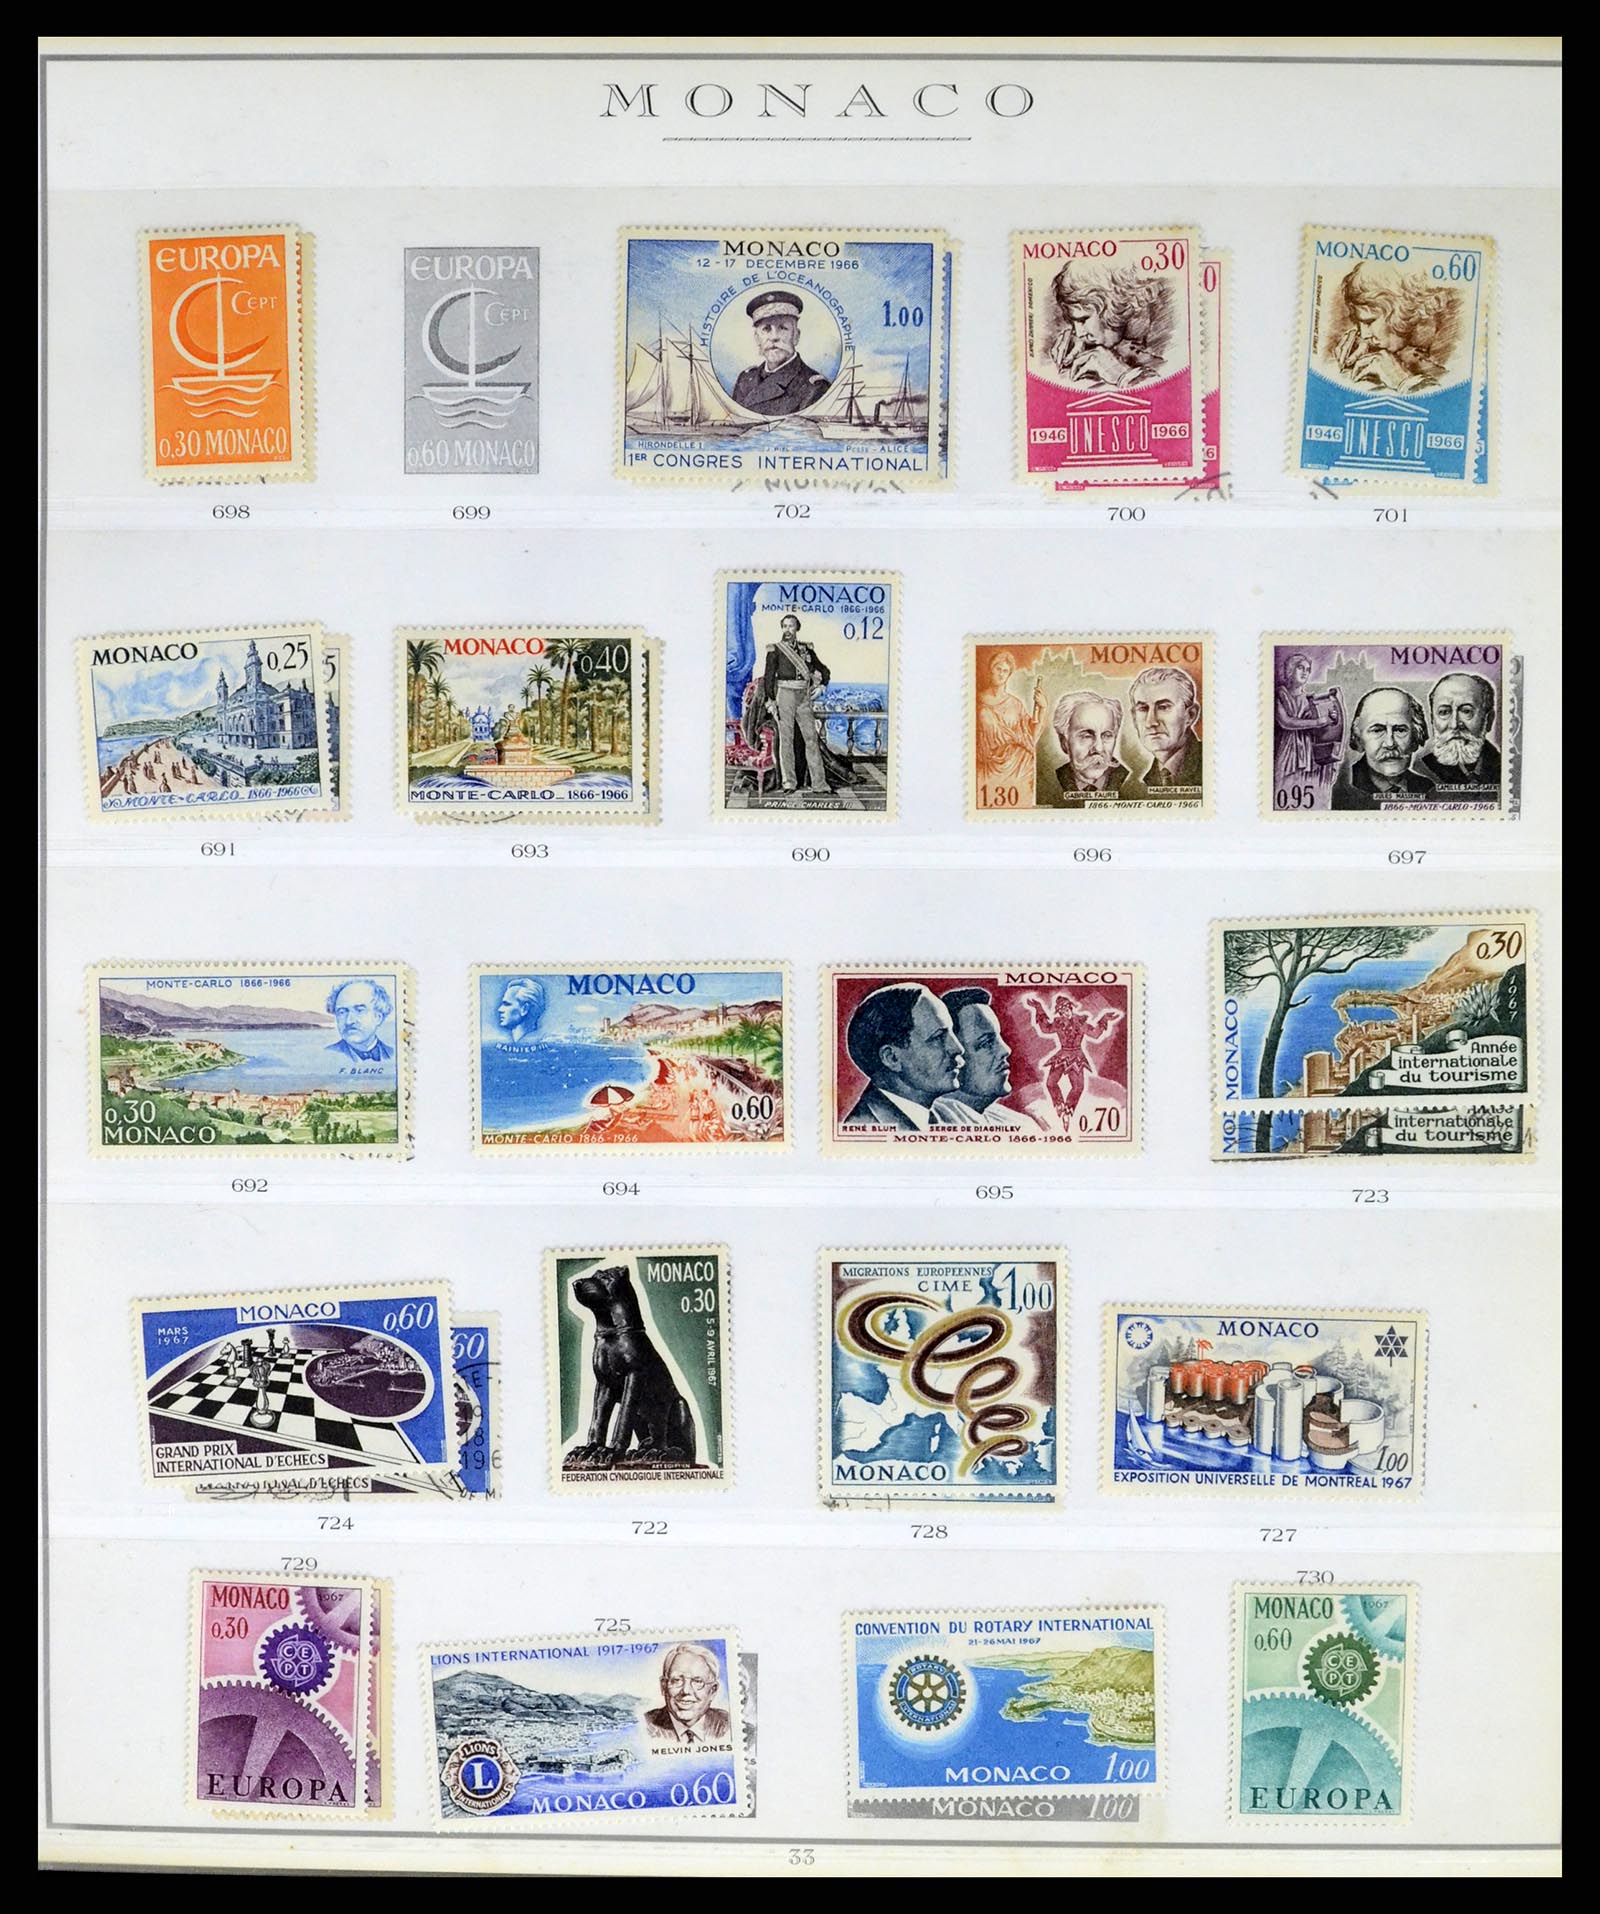 37437 063 - Stamp collection 37437 Monaco 1885-1996.